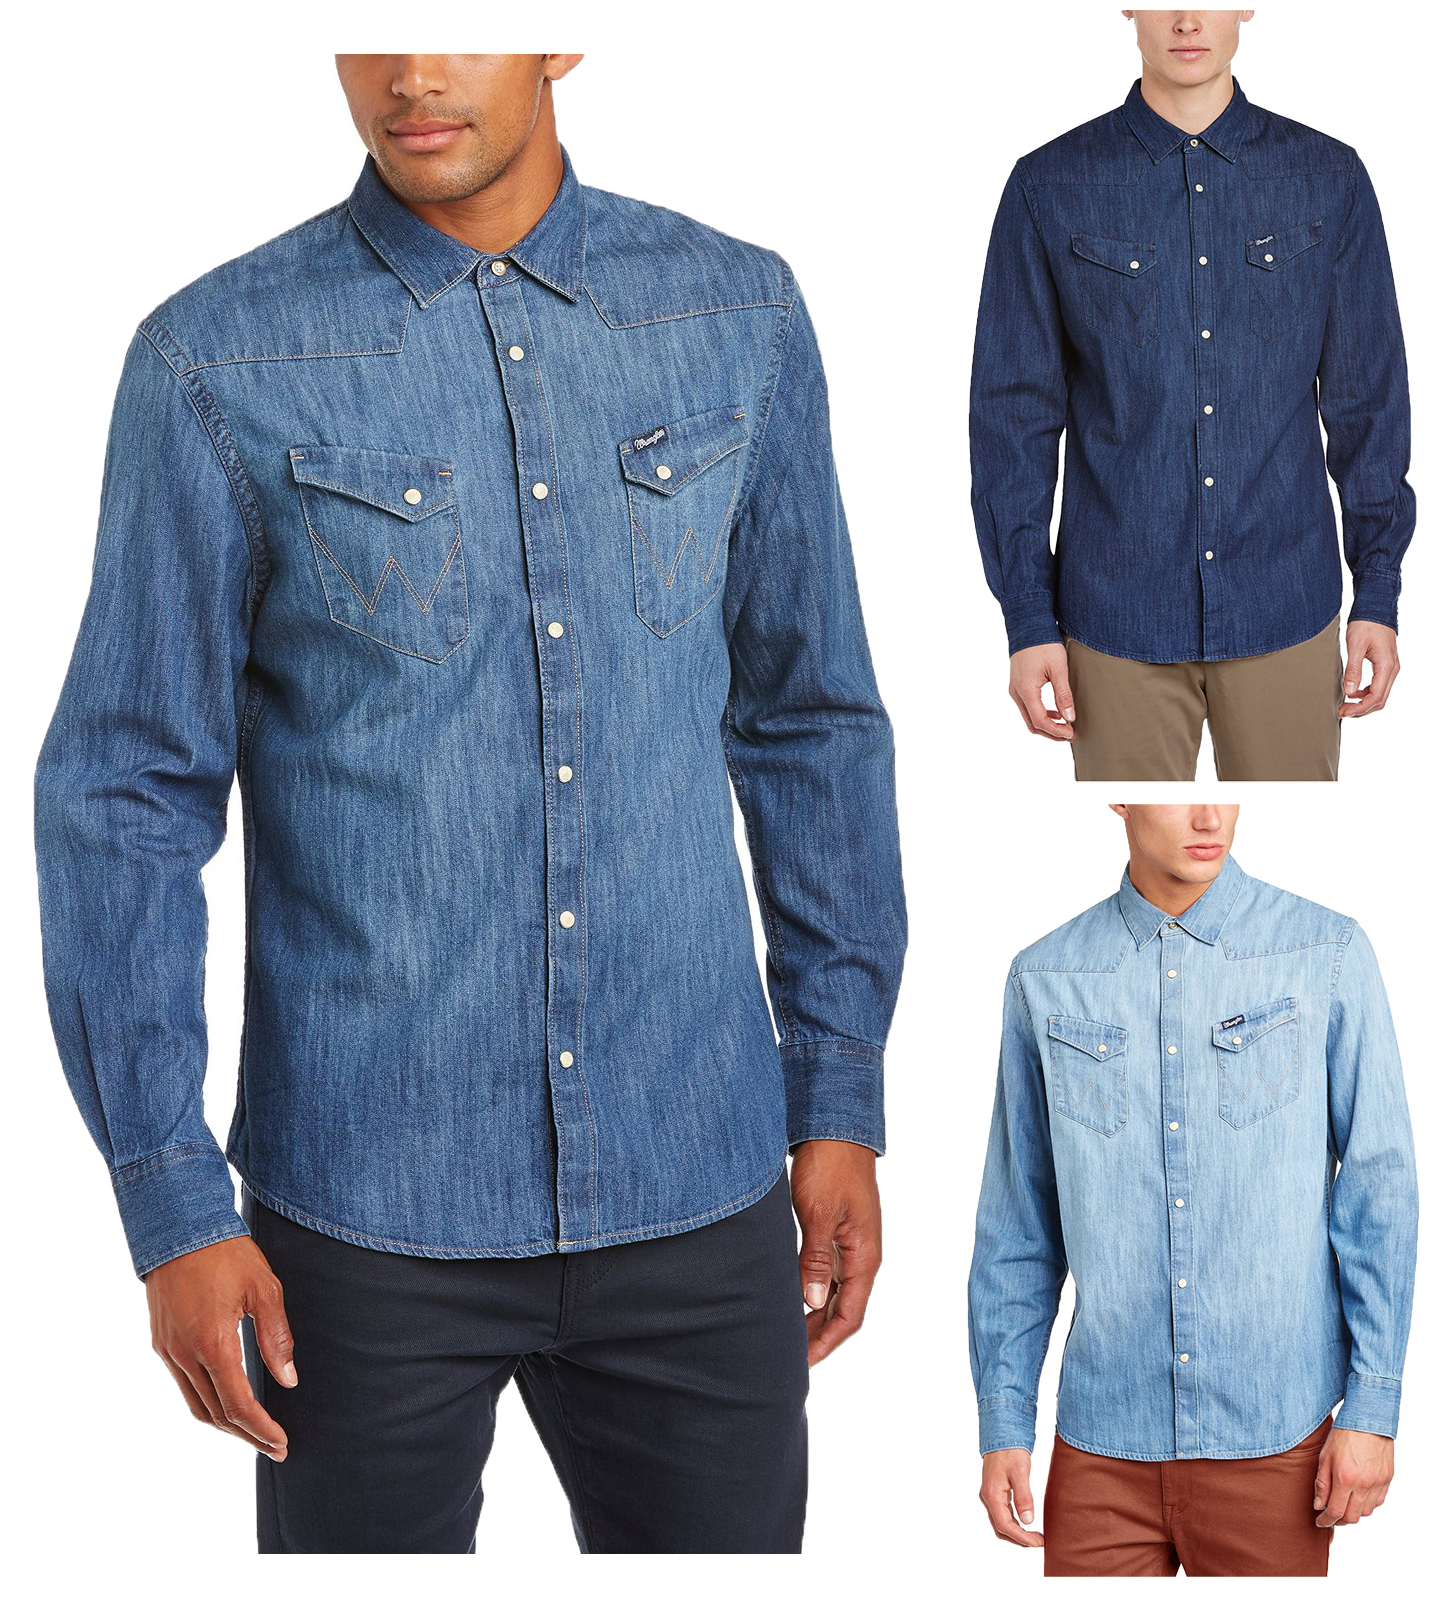 Wrangler Denim Shirt New Western Light Dark Indigo Blue Jean Shirts ...